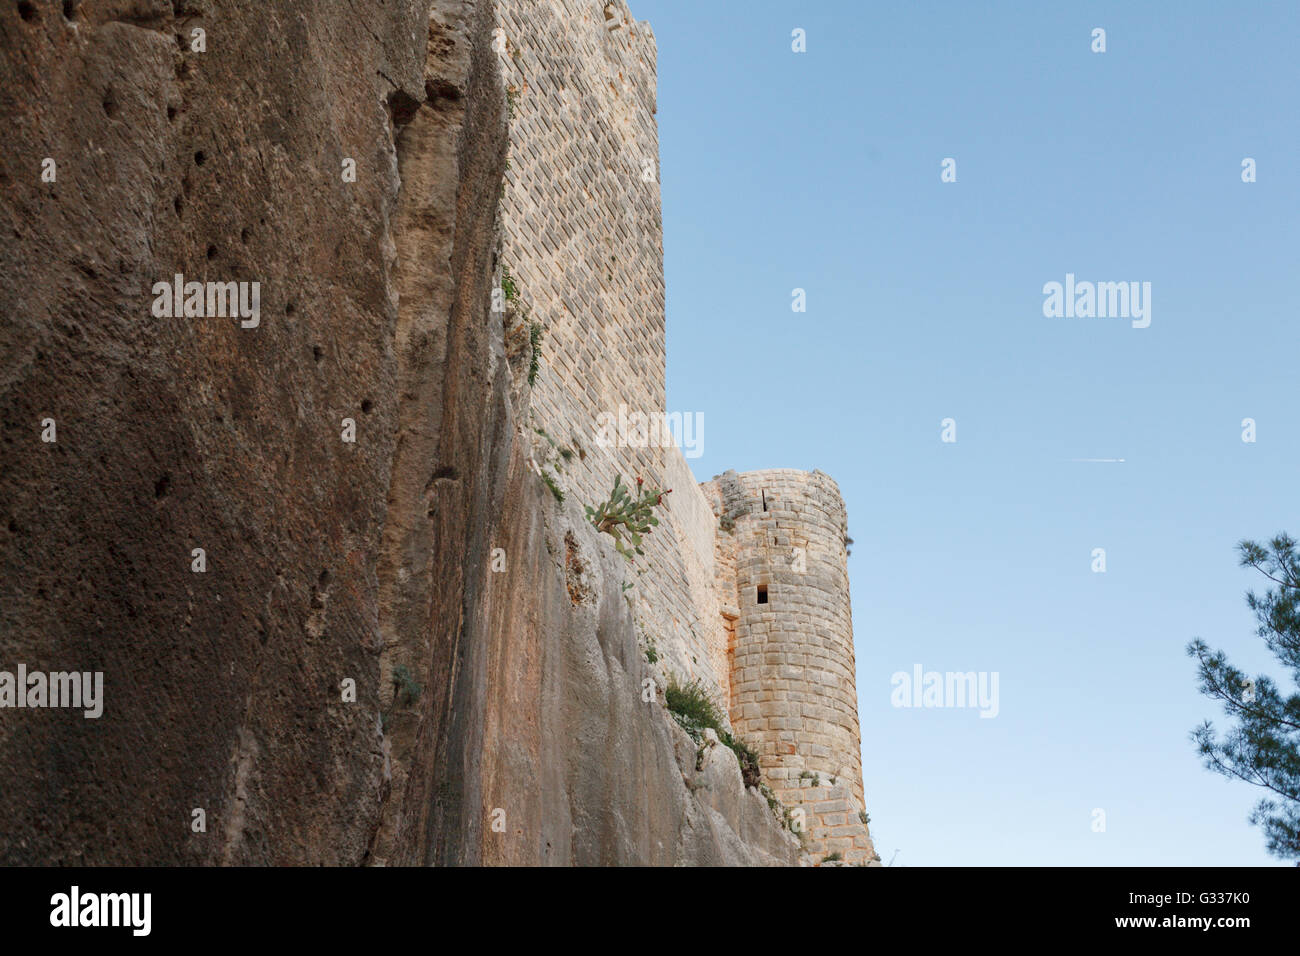 Citadel of Salah Ed-Din. Saladin Castle, Latakia, Syria. Stock Photo